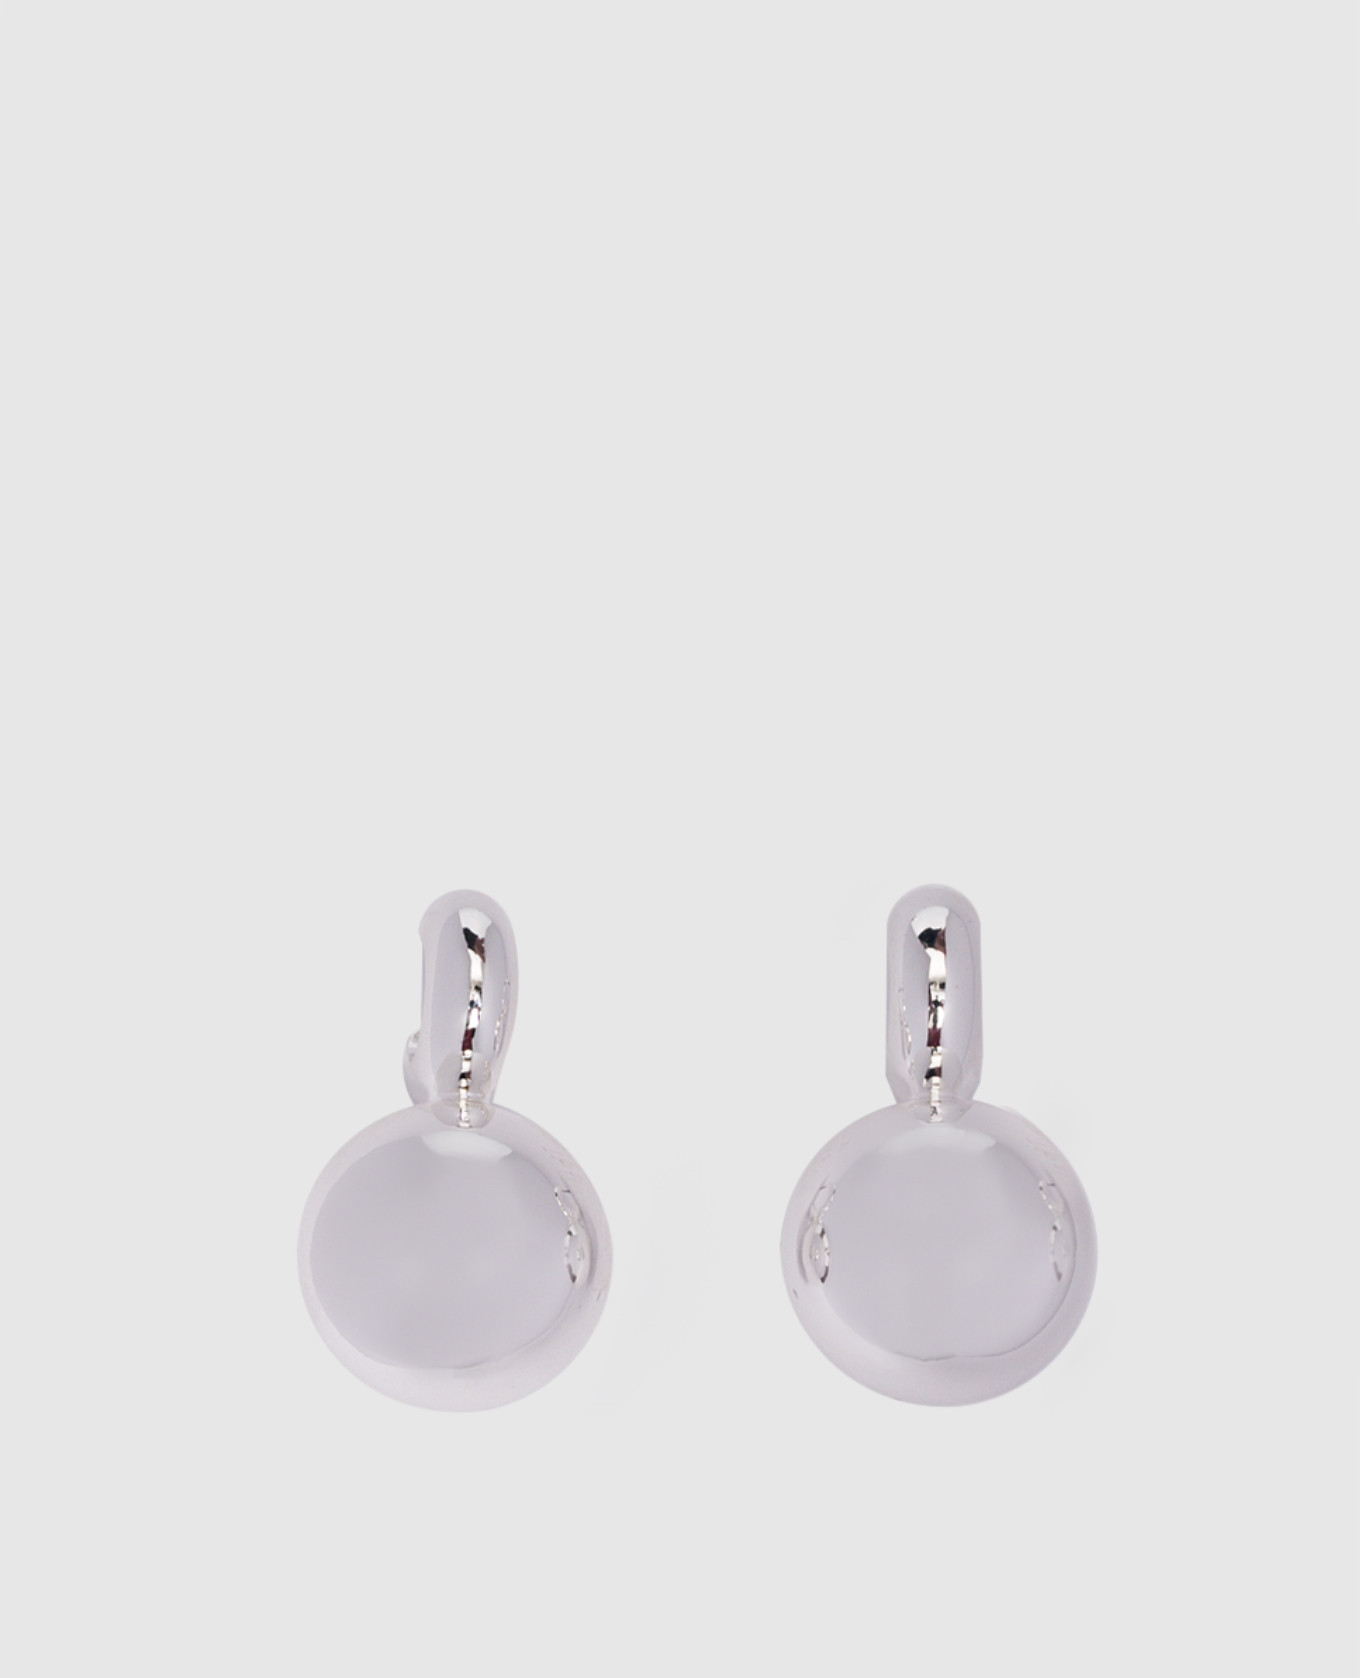 Lyra silver earrings